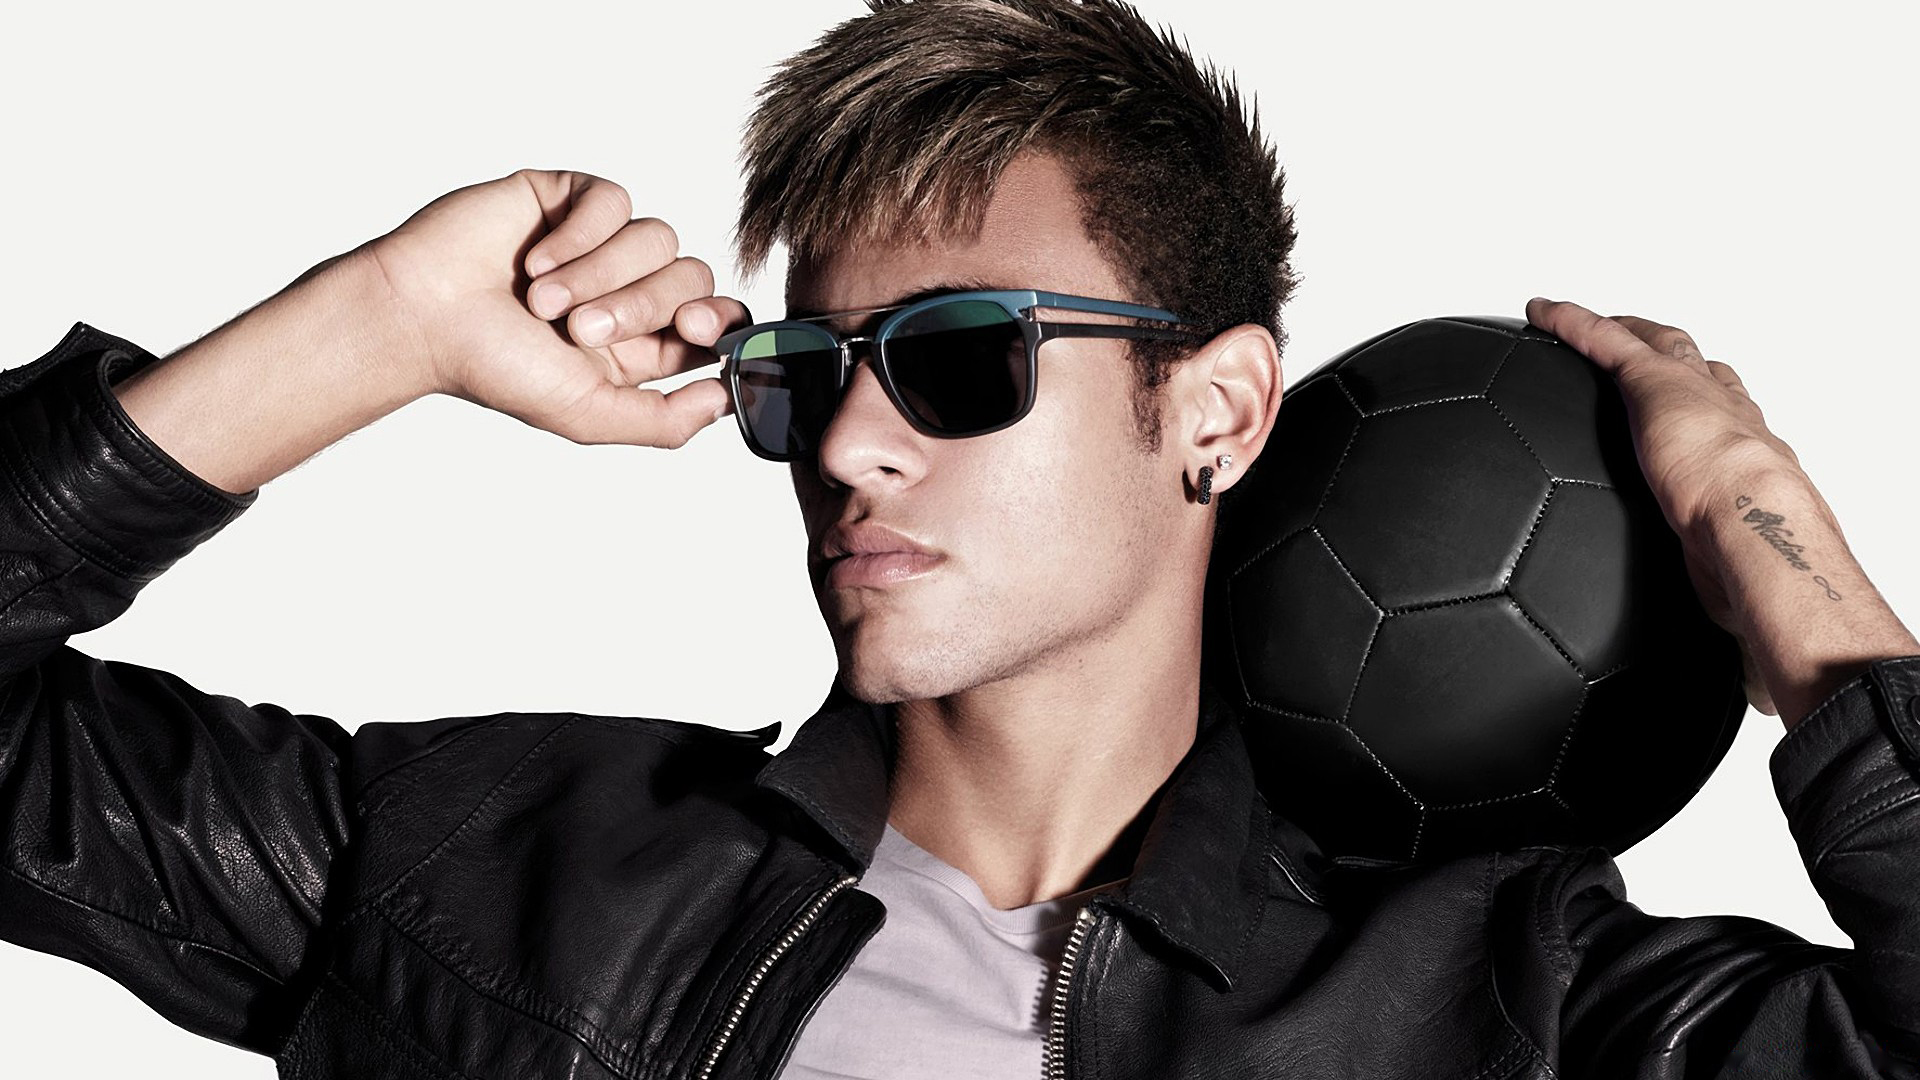 Wallpaper Neymar Jr Police Sunglasses Wiki